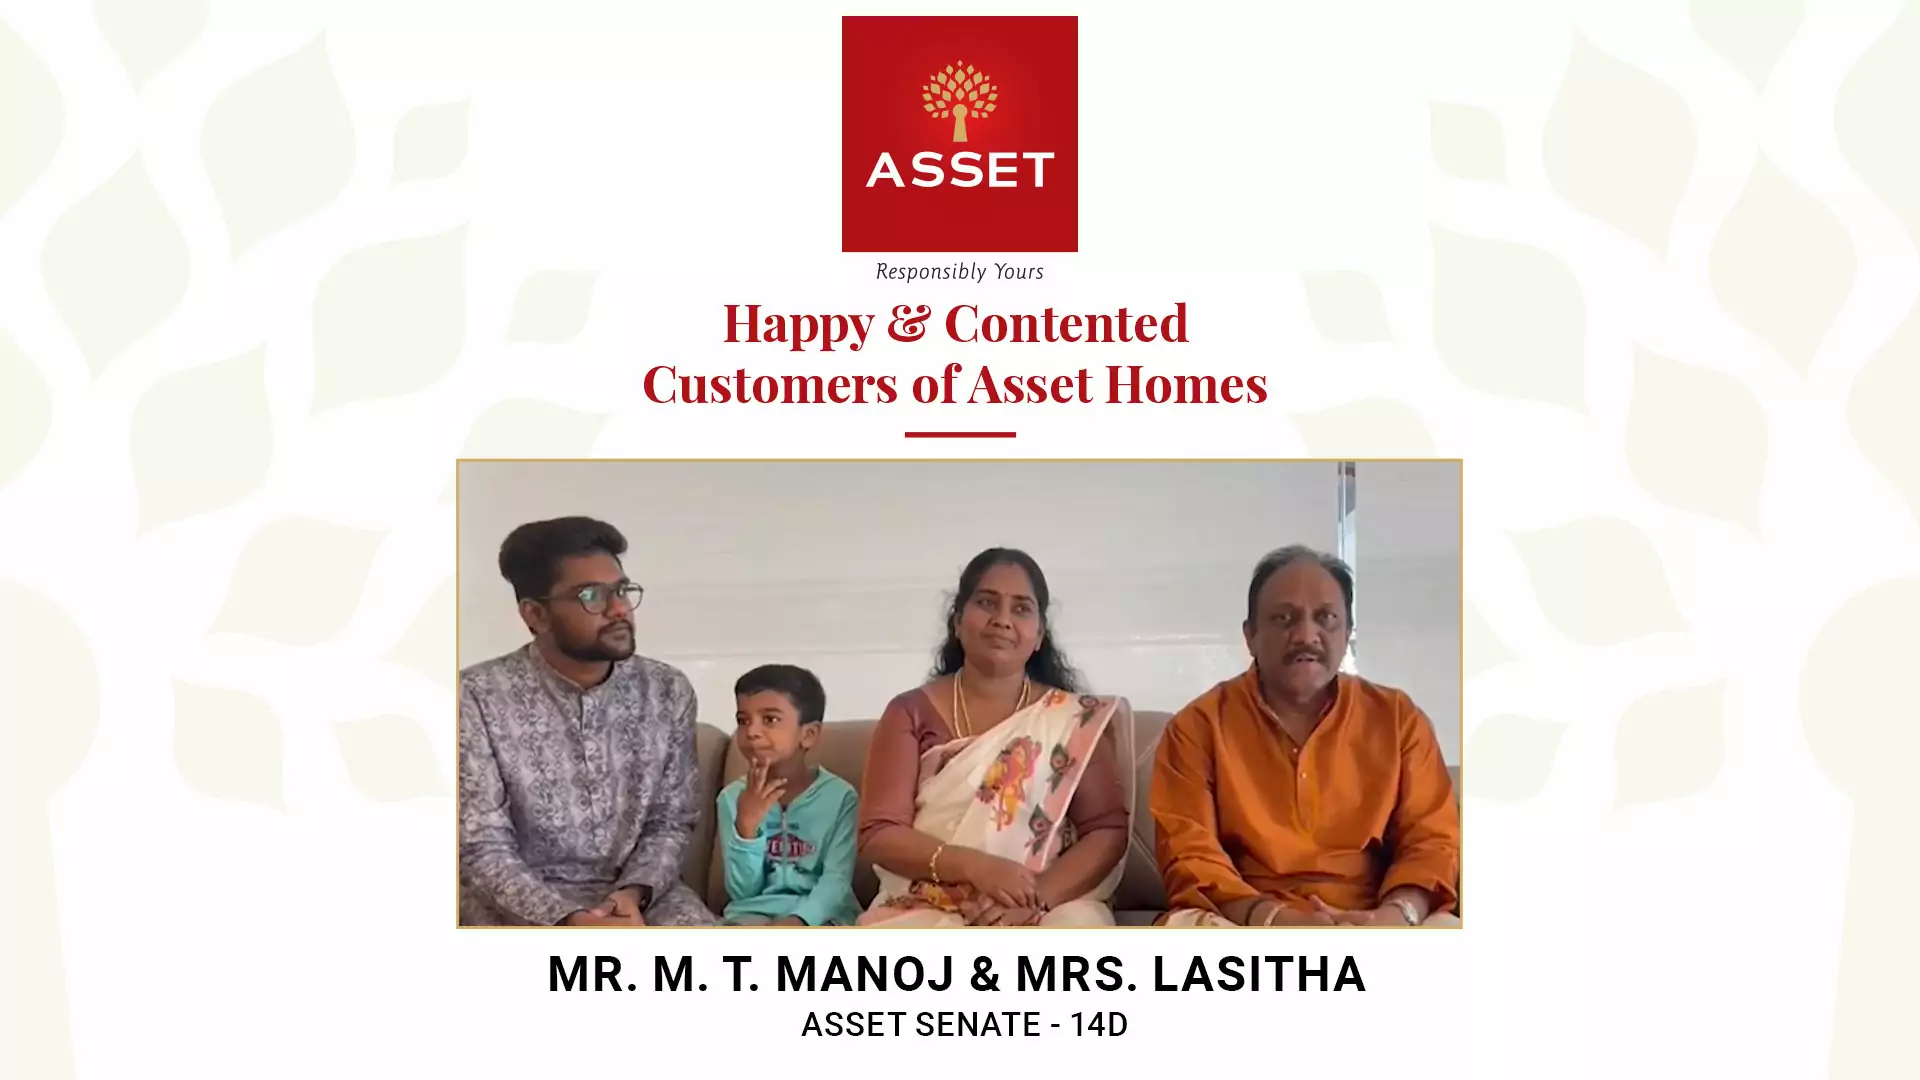 Mr. M. T. Manoj & Mrs. Lasitha, Asset Senate – 14D